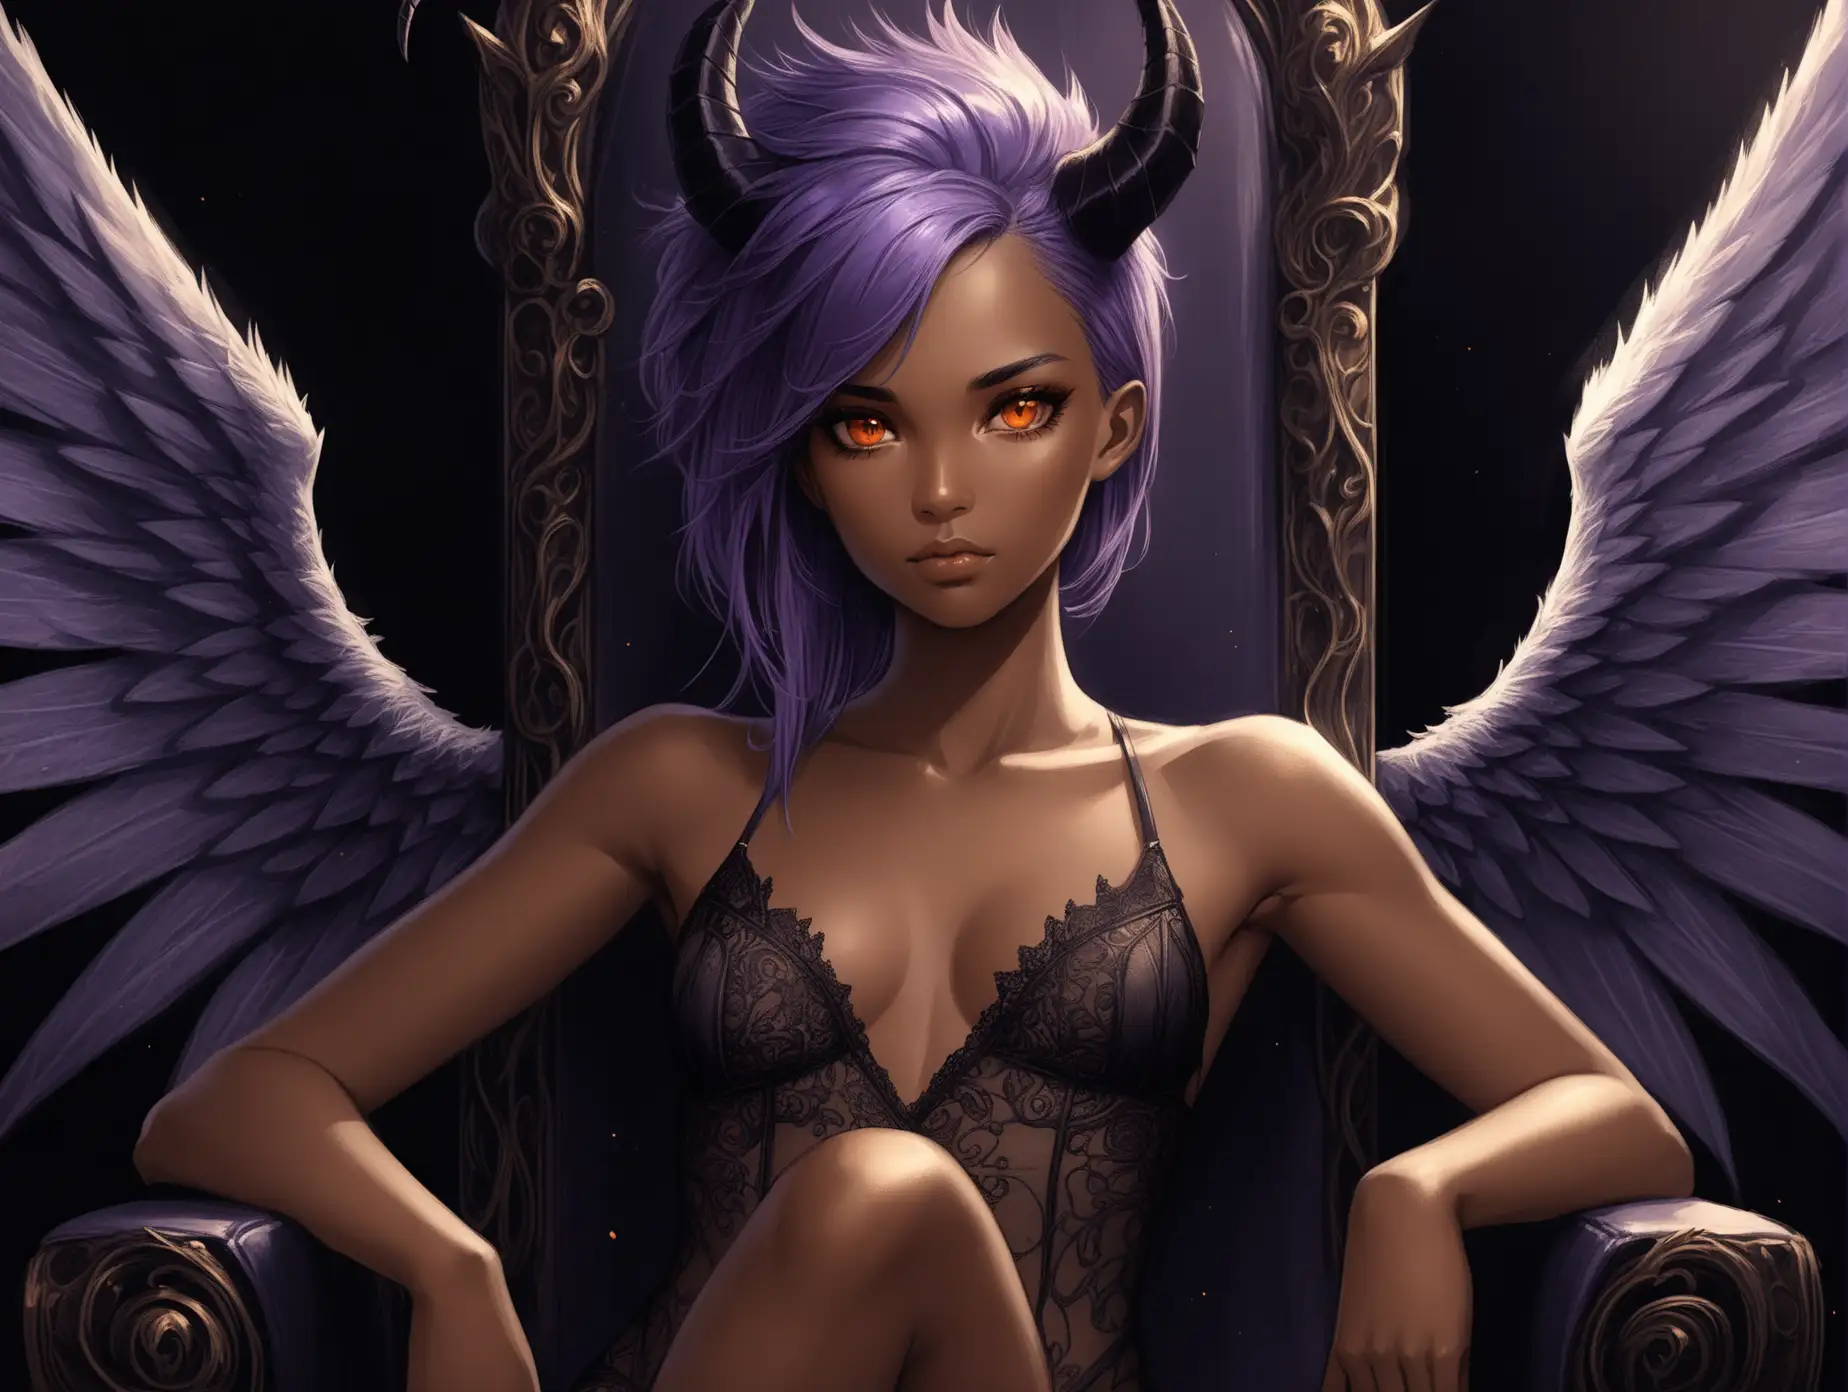 Dark-Fantasy-Art-Seductive-Sukubgirl-on-Throne-with-Wings-and-Tail